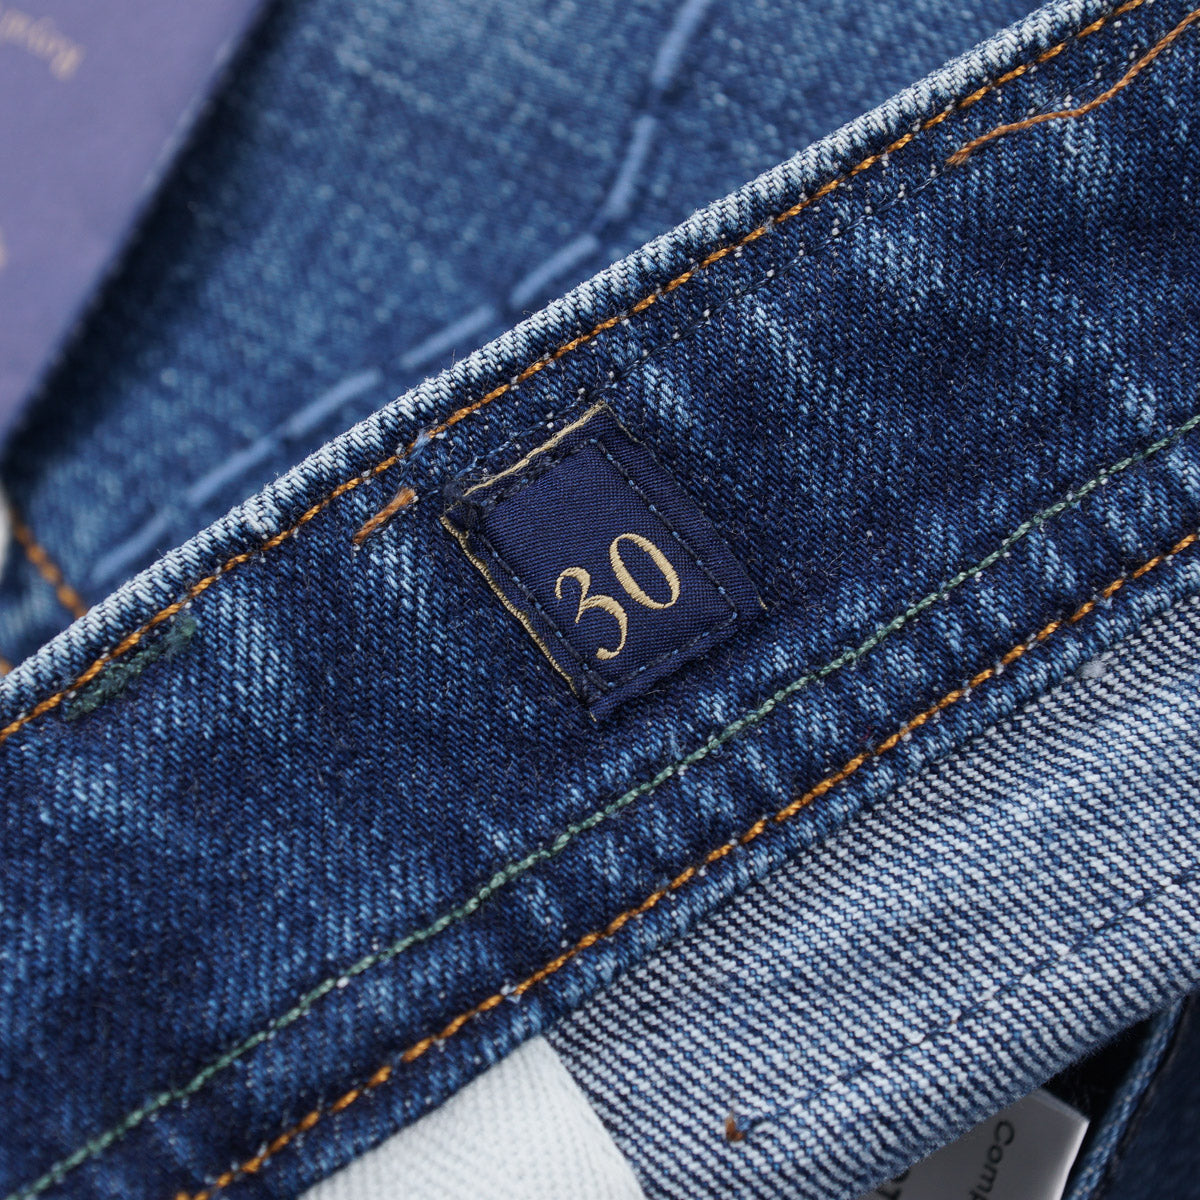 Borrelli Royal Collection Selvedge Jeans - Top Shelf Apparel